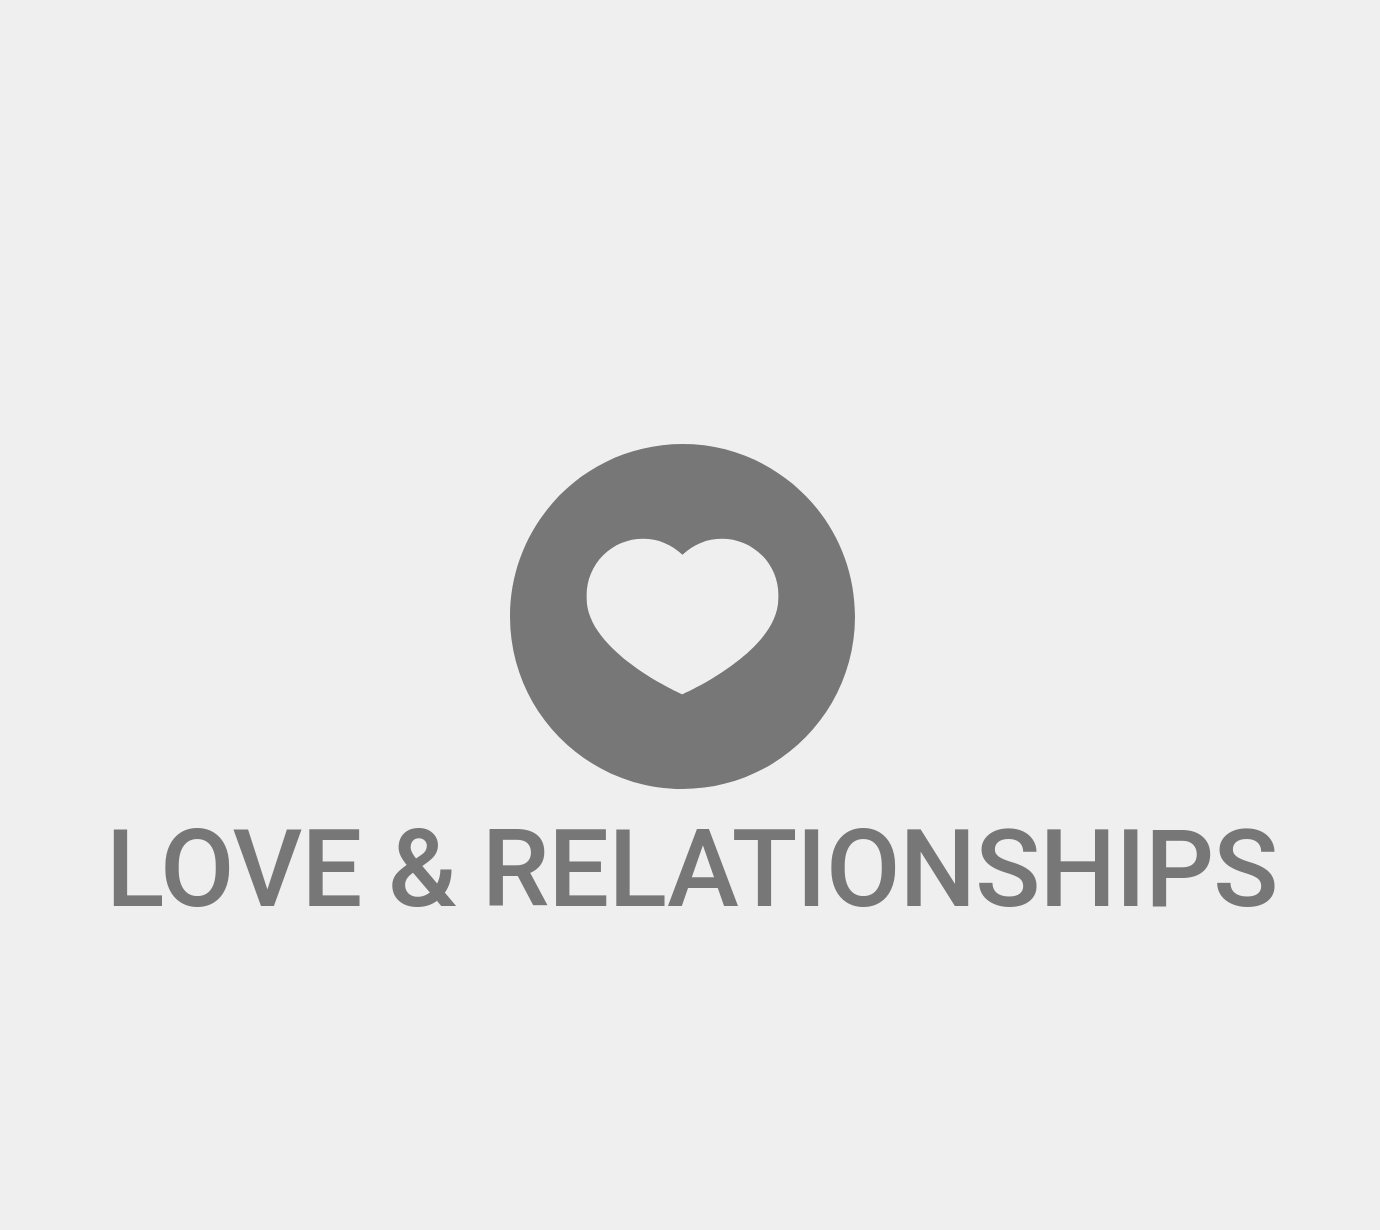 Love & Relationships